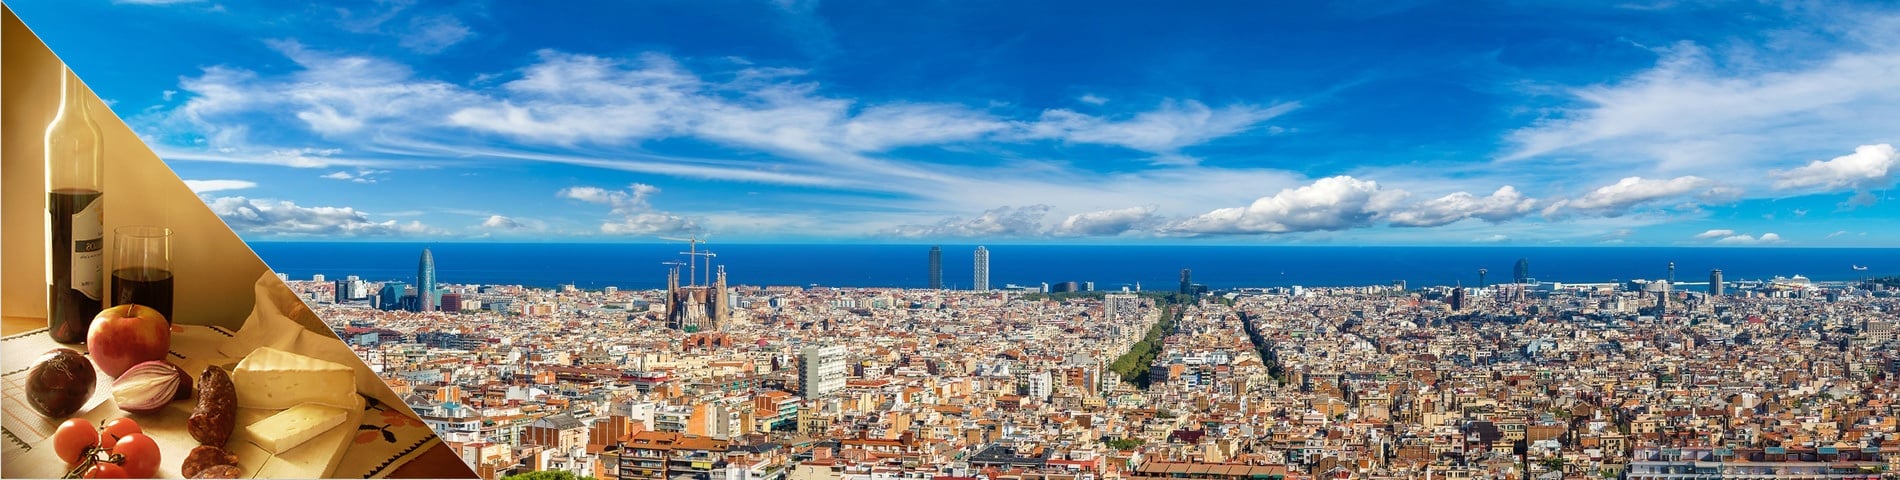 Barcelona - Španielčina a kultúra